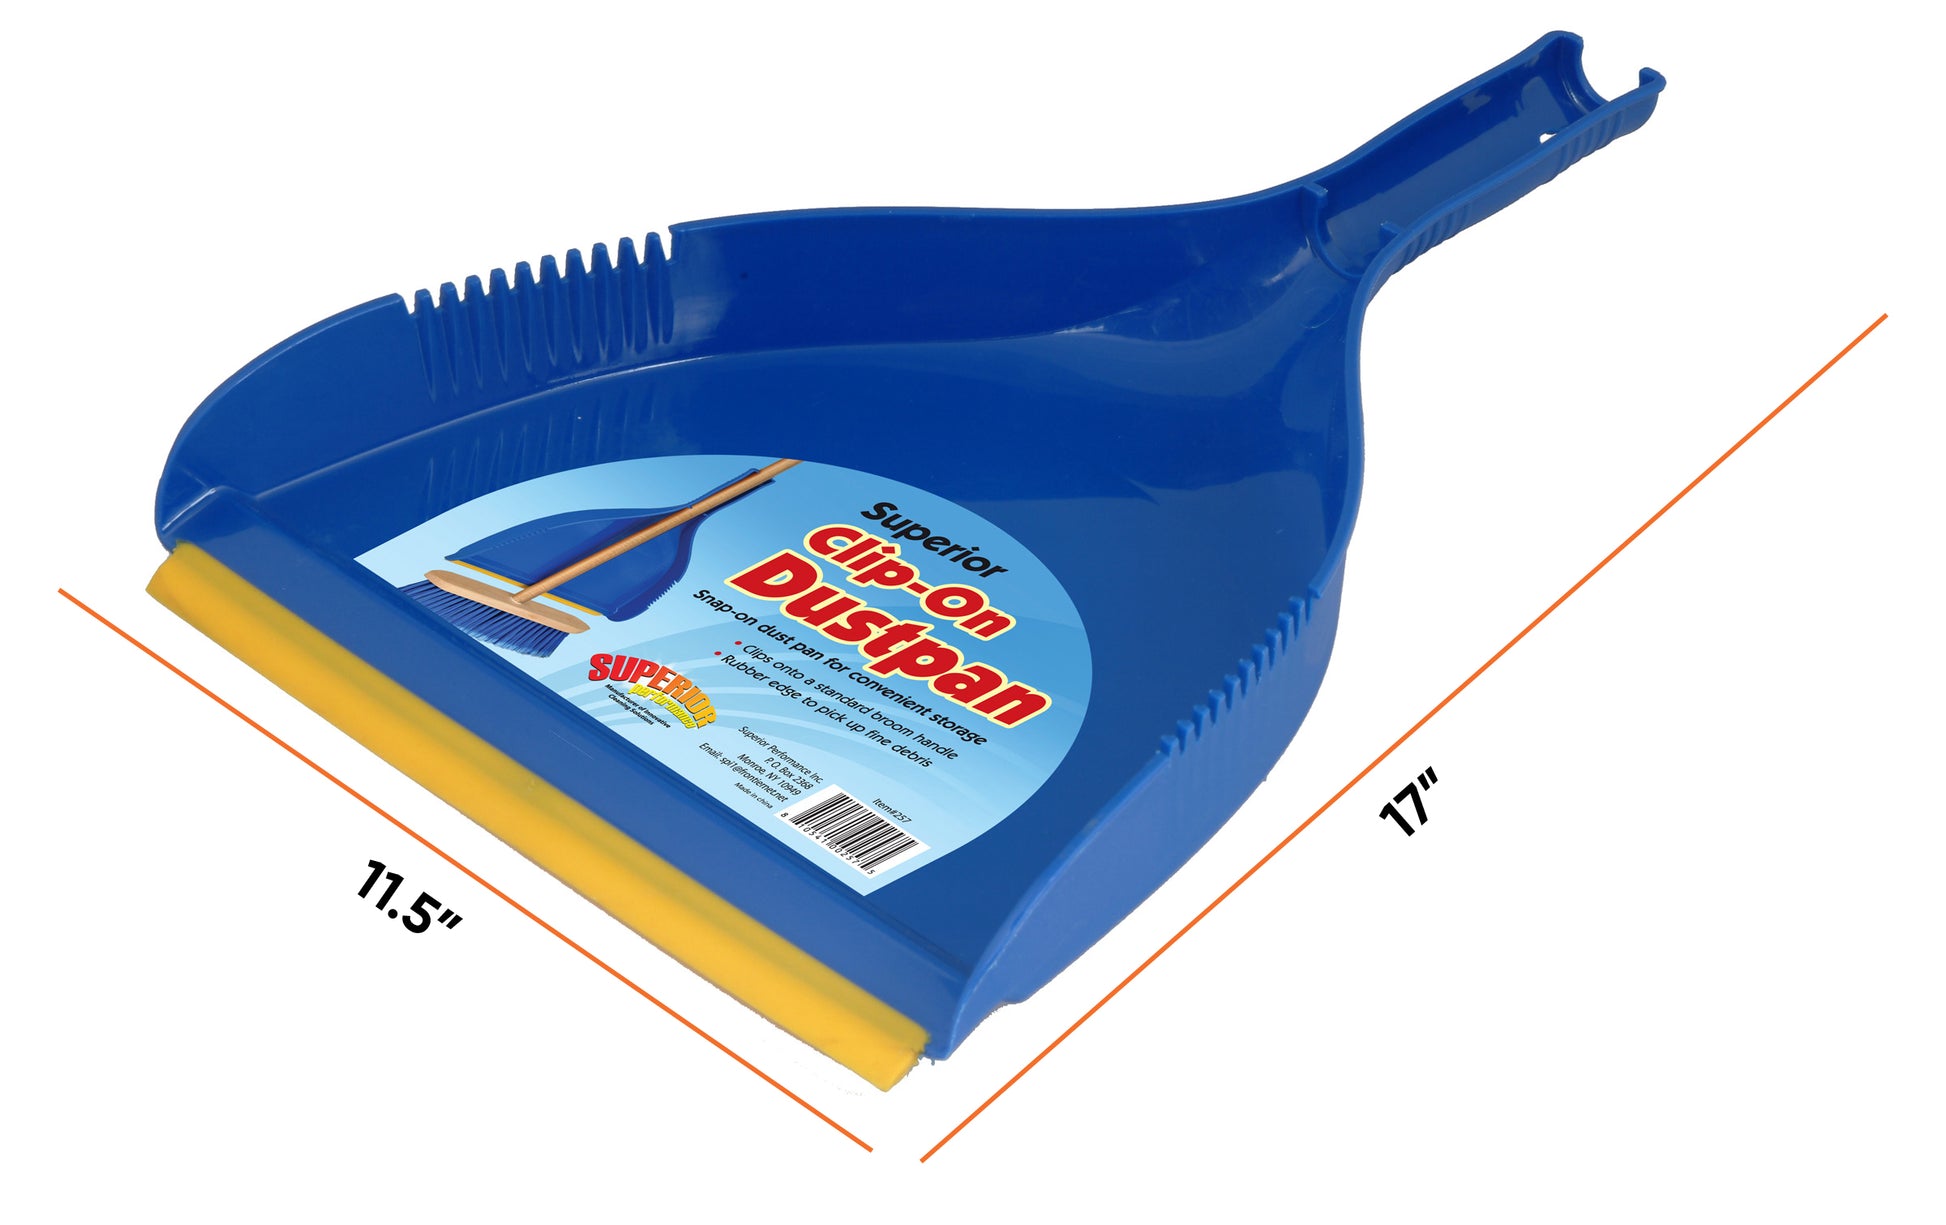 Superio NA Broom & Dustpan Set, Blue